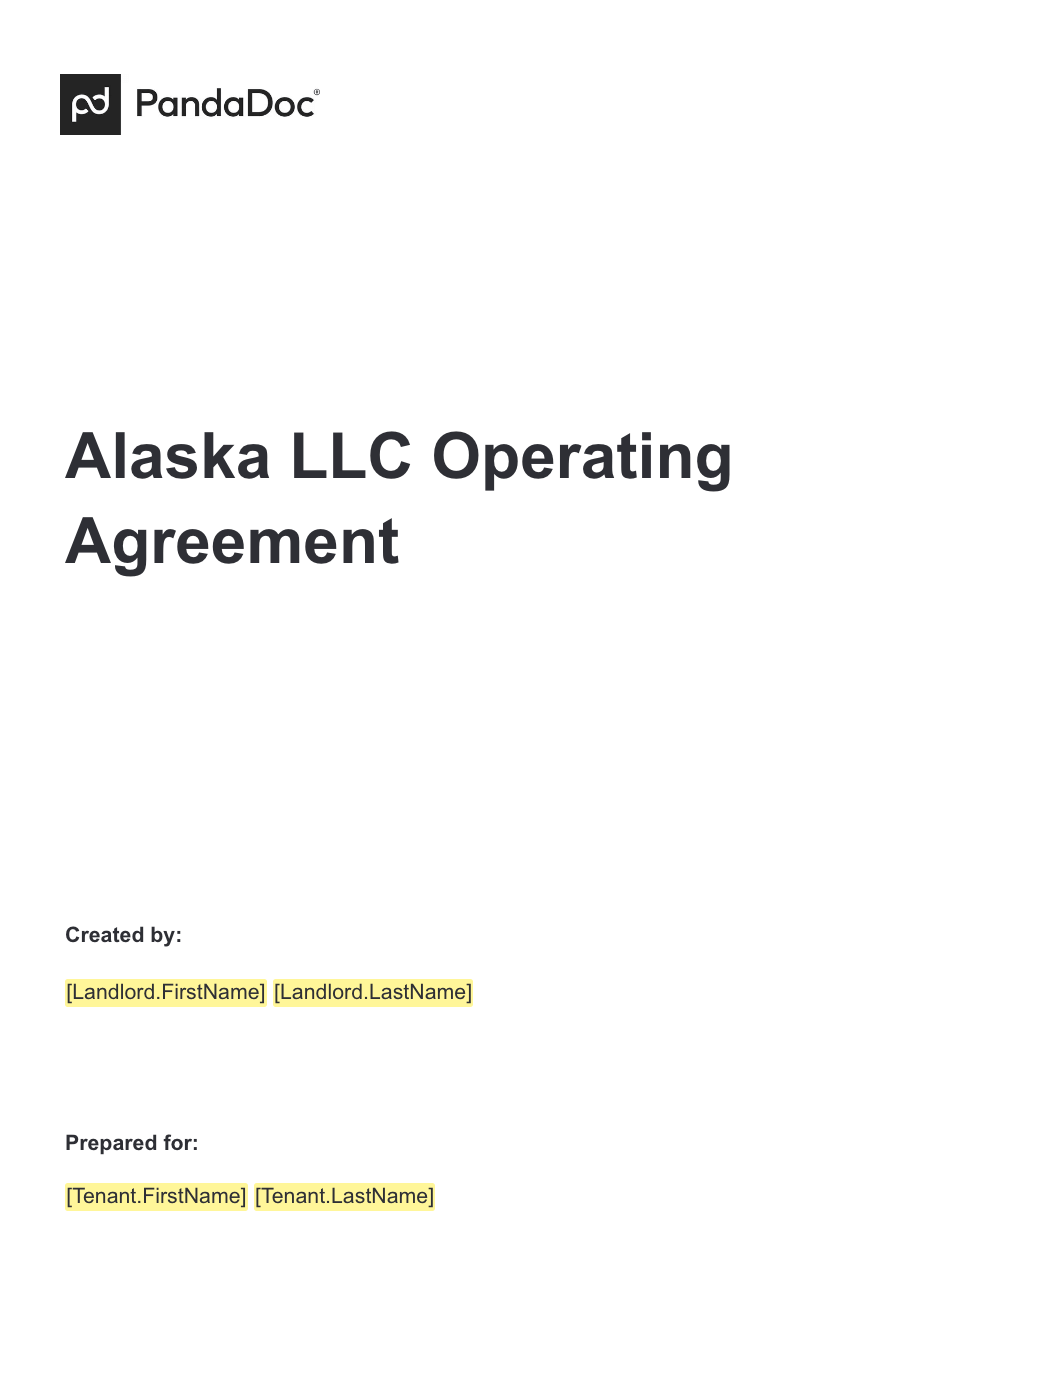 Alaska LLC Operating Agreement 